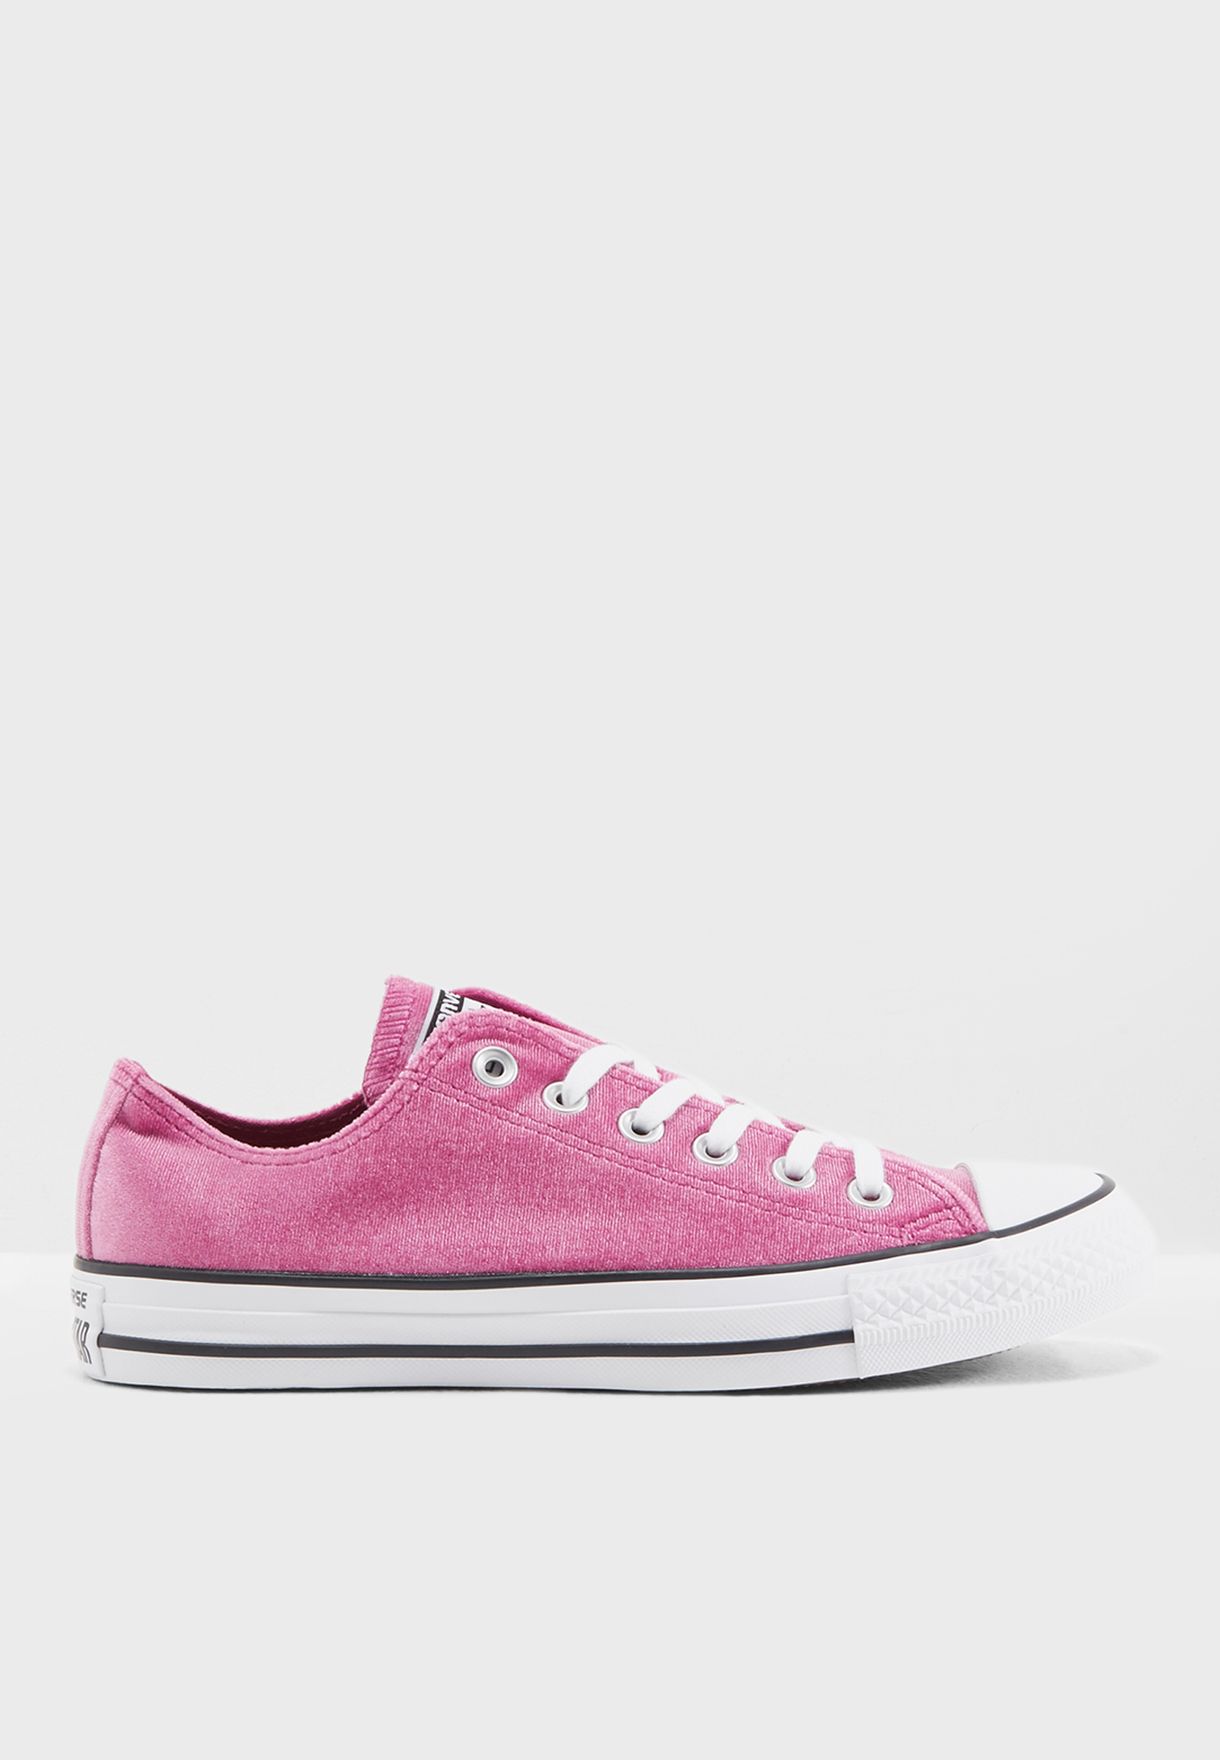 velvet converse pink